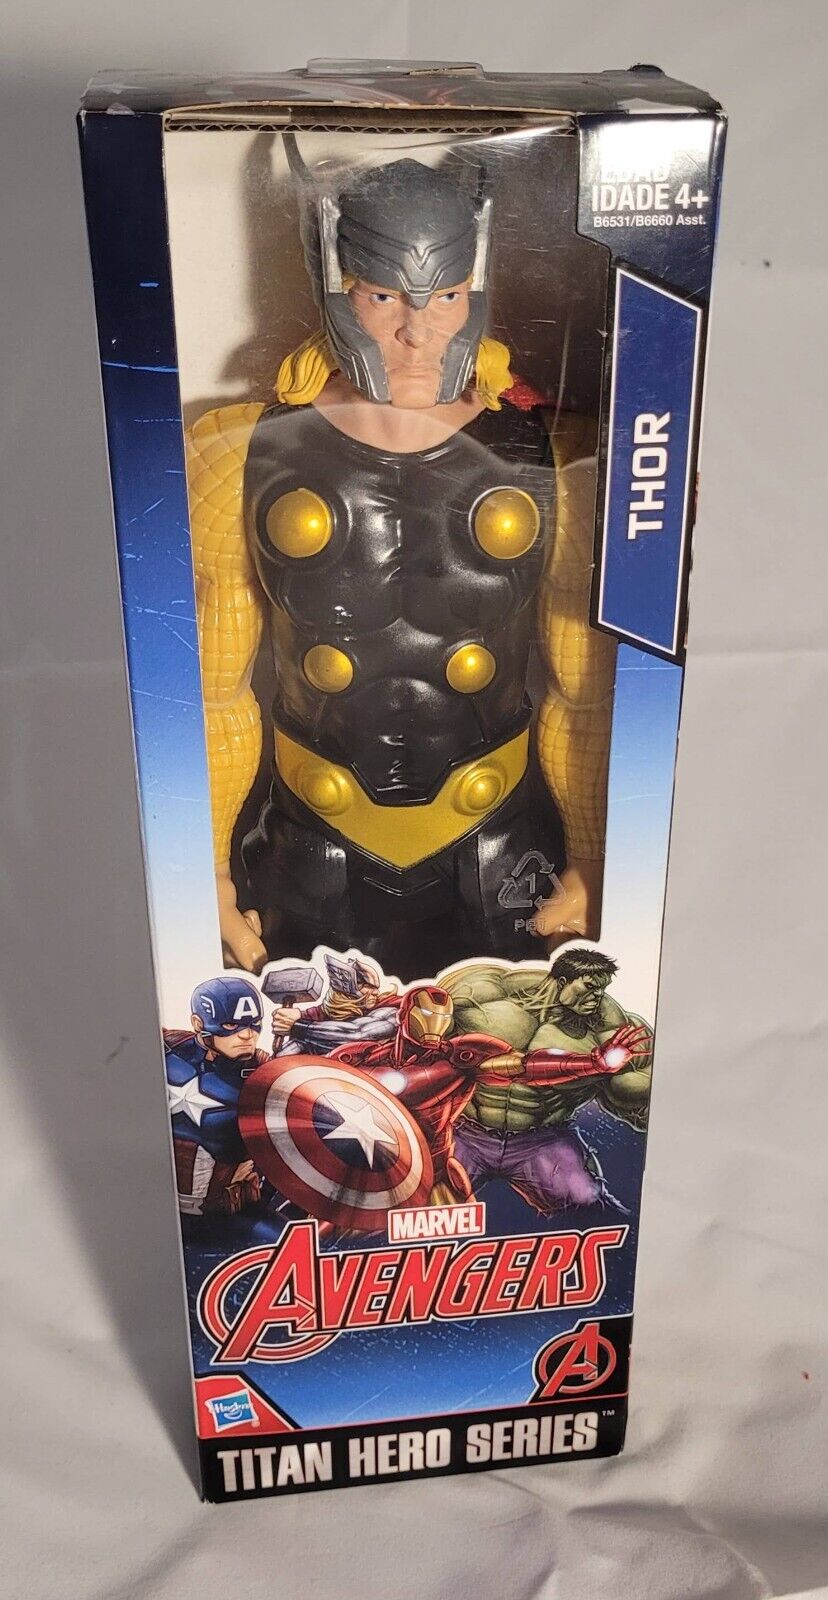 THOR Action Figure Marvel Avengers Titan Hero Series by Hasbro 12 Inch